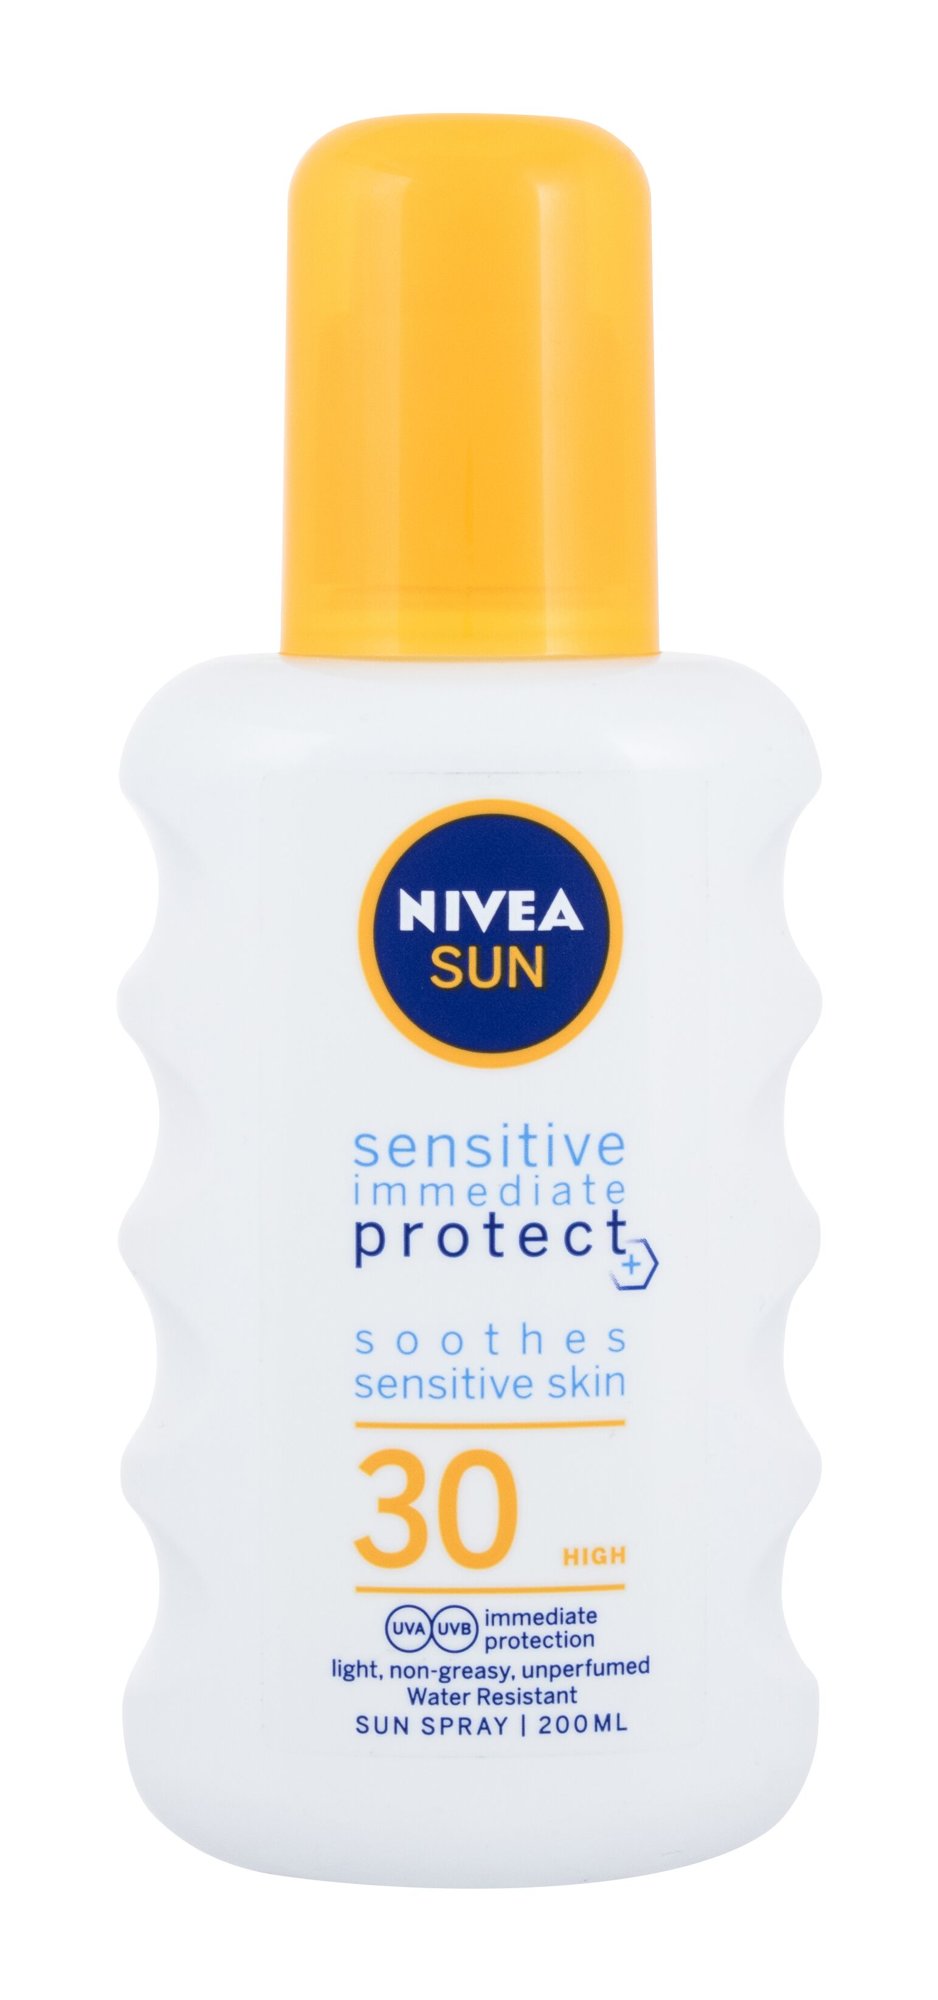 Nivea Sun Sensitive Immediate Protect+ 200ml įdegio losjonas